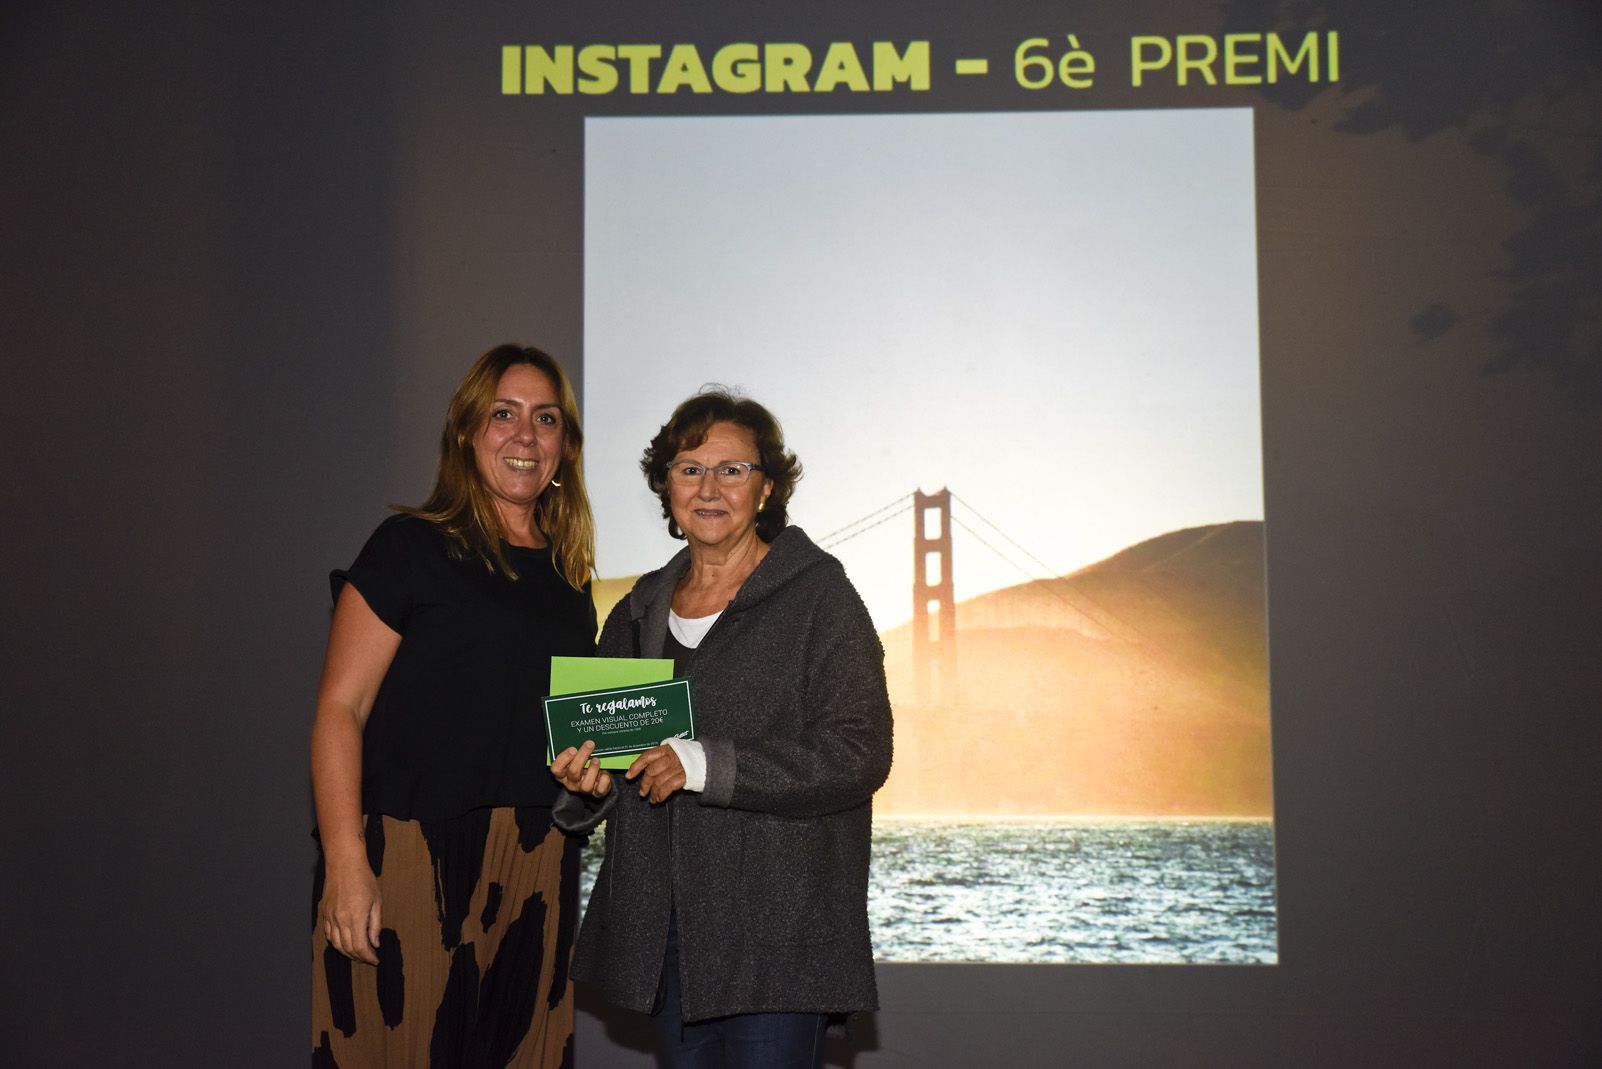 6è premi ‘Instagram’ miquelserrra - Golden hour near the Golden Gate Bridge. Foto: bernat Millet